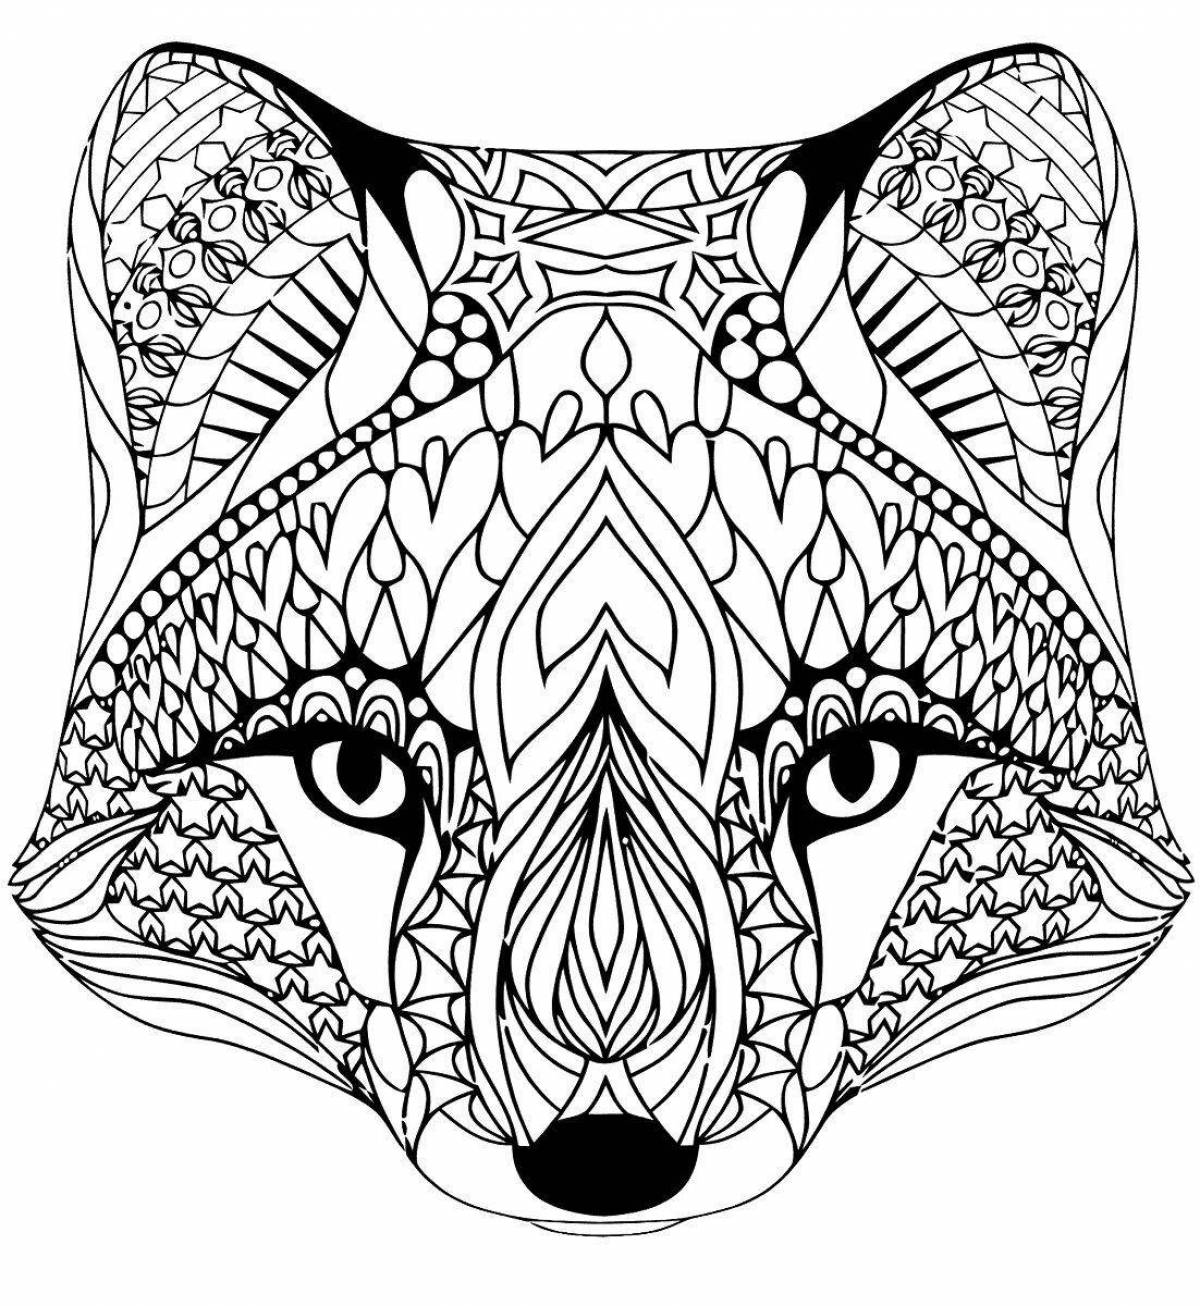 Splendorous coloring page fox complex